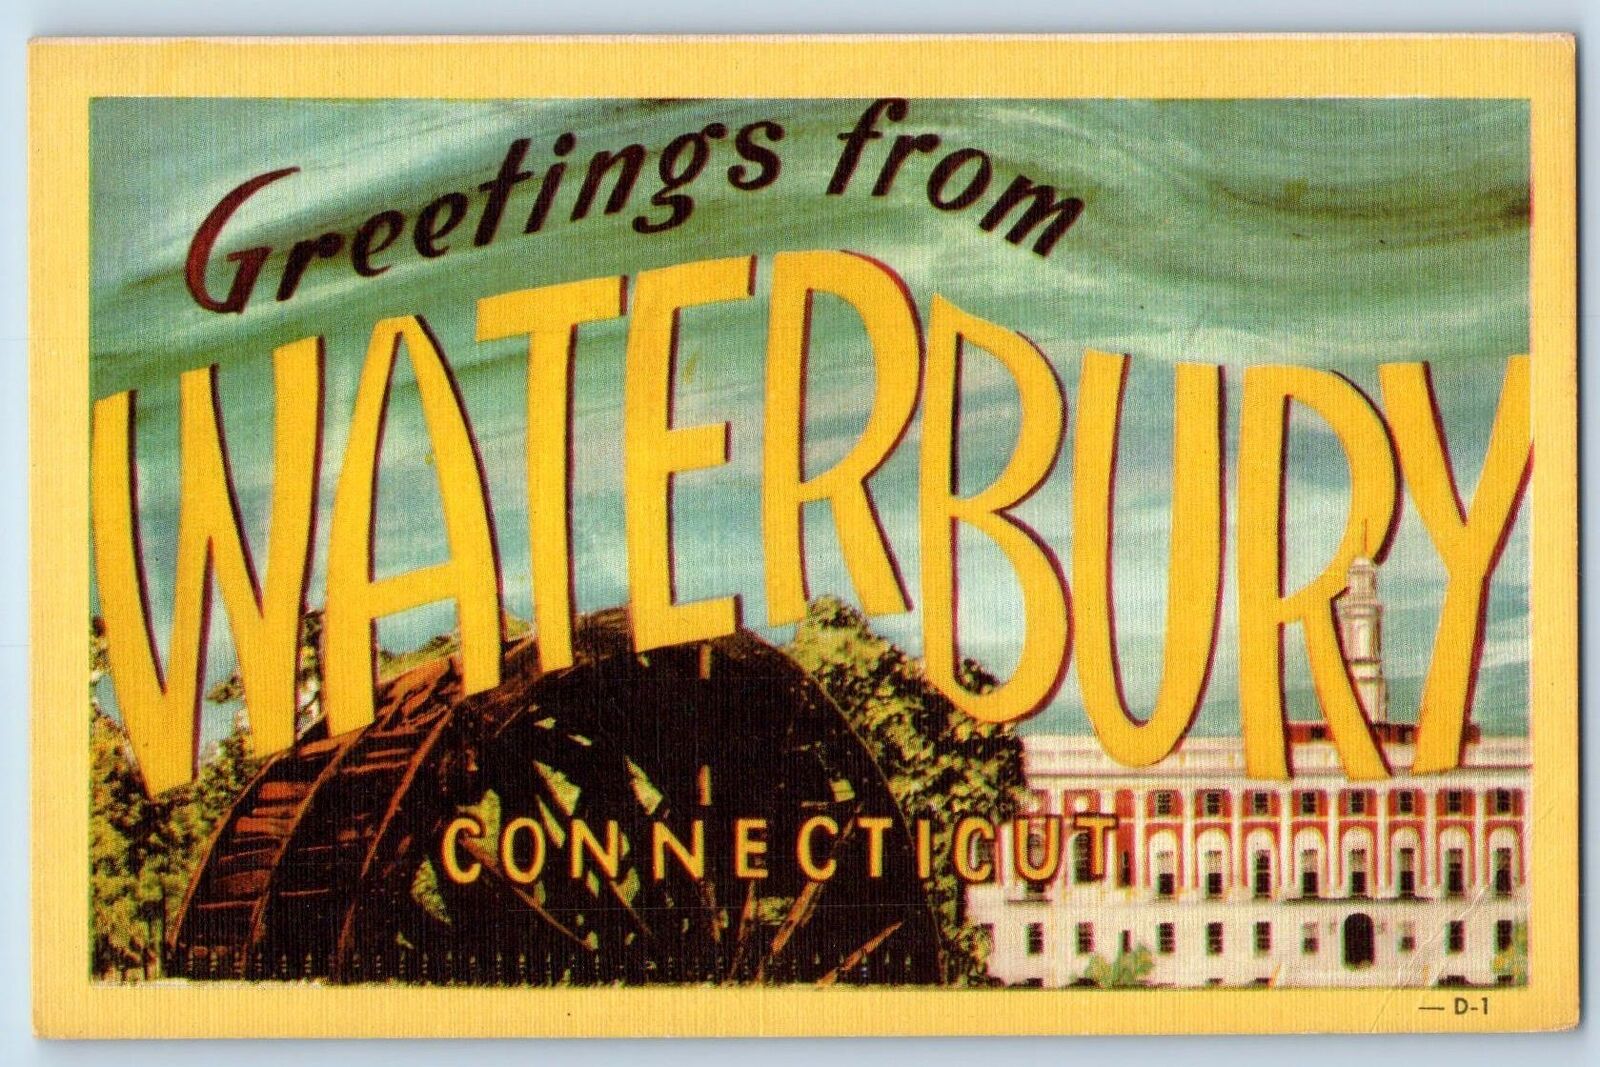 c1940 Greetings From Waterbury Large Latter Connecticut Correspondence Postcard